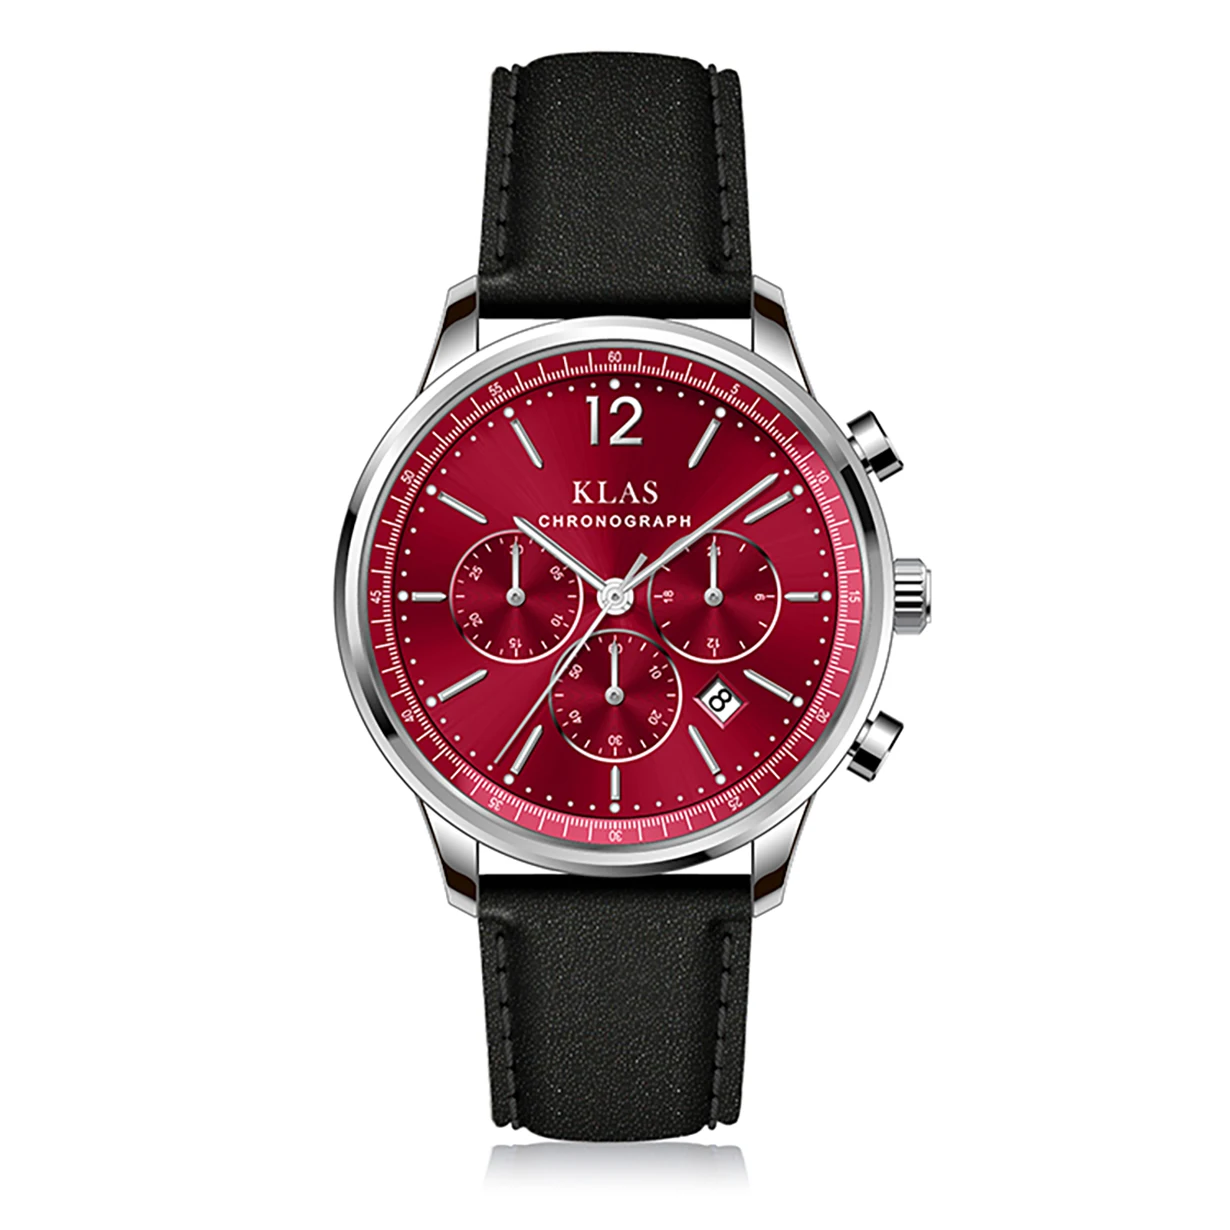 New fashion stainless steel watch band men's birthday gift watch men's waterproof men's watch 2021 KLAS